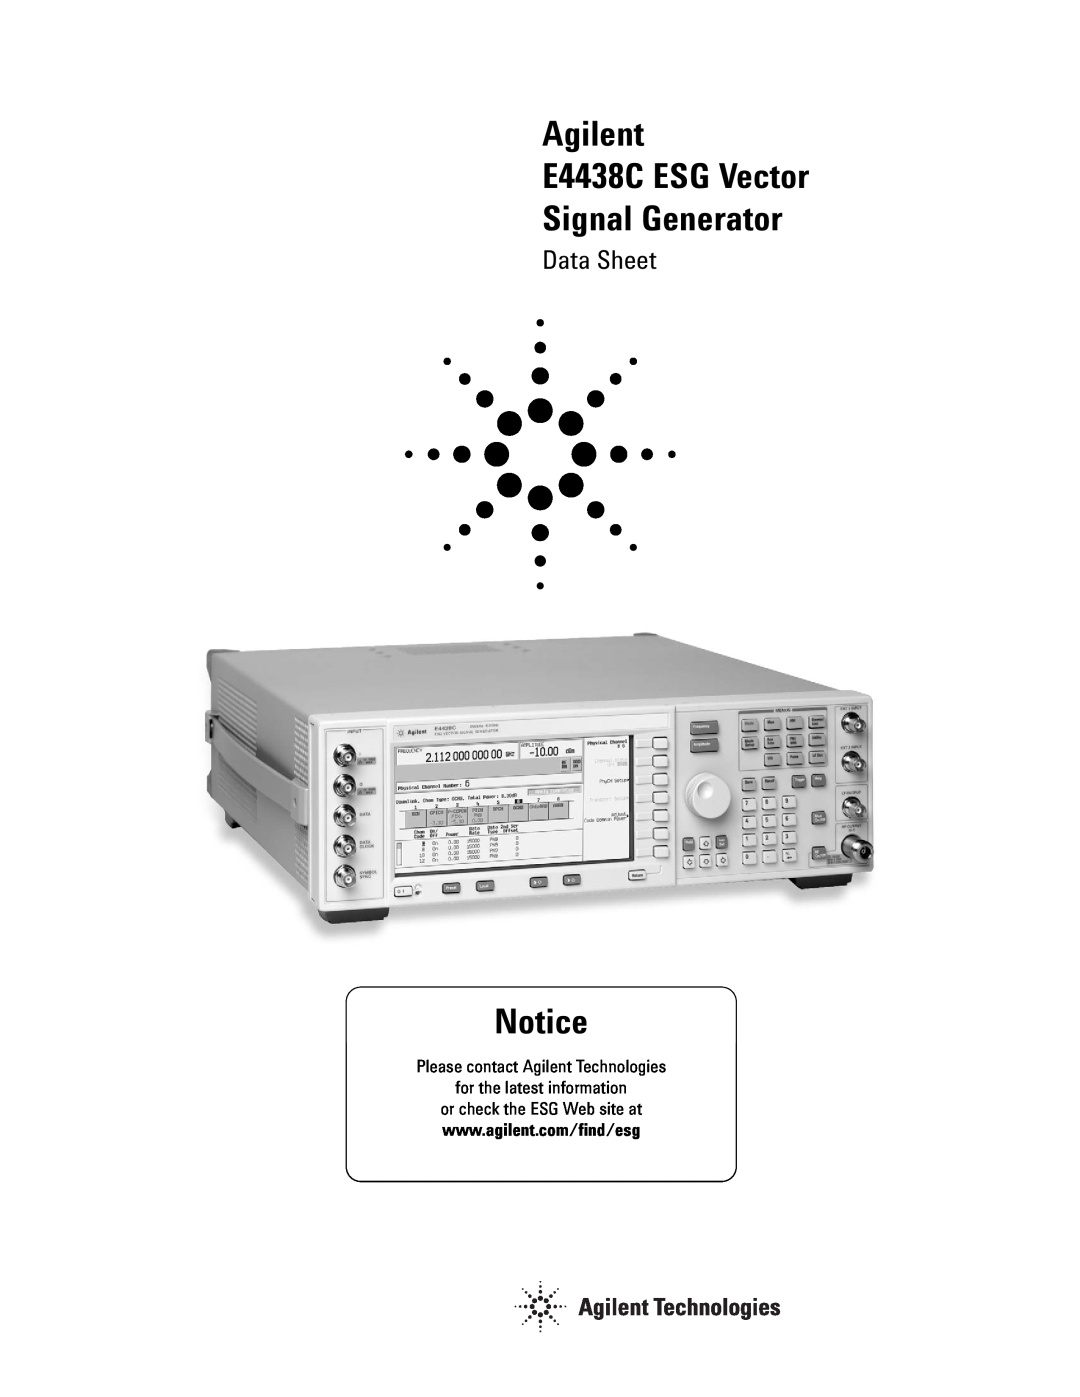 Agilent Technologies manual Agilent E4438C ESG Vector Signal Generator, Data Sheet 